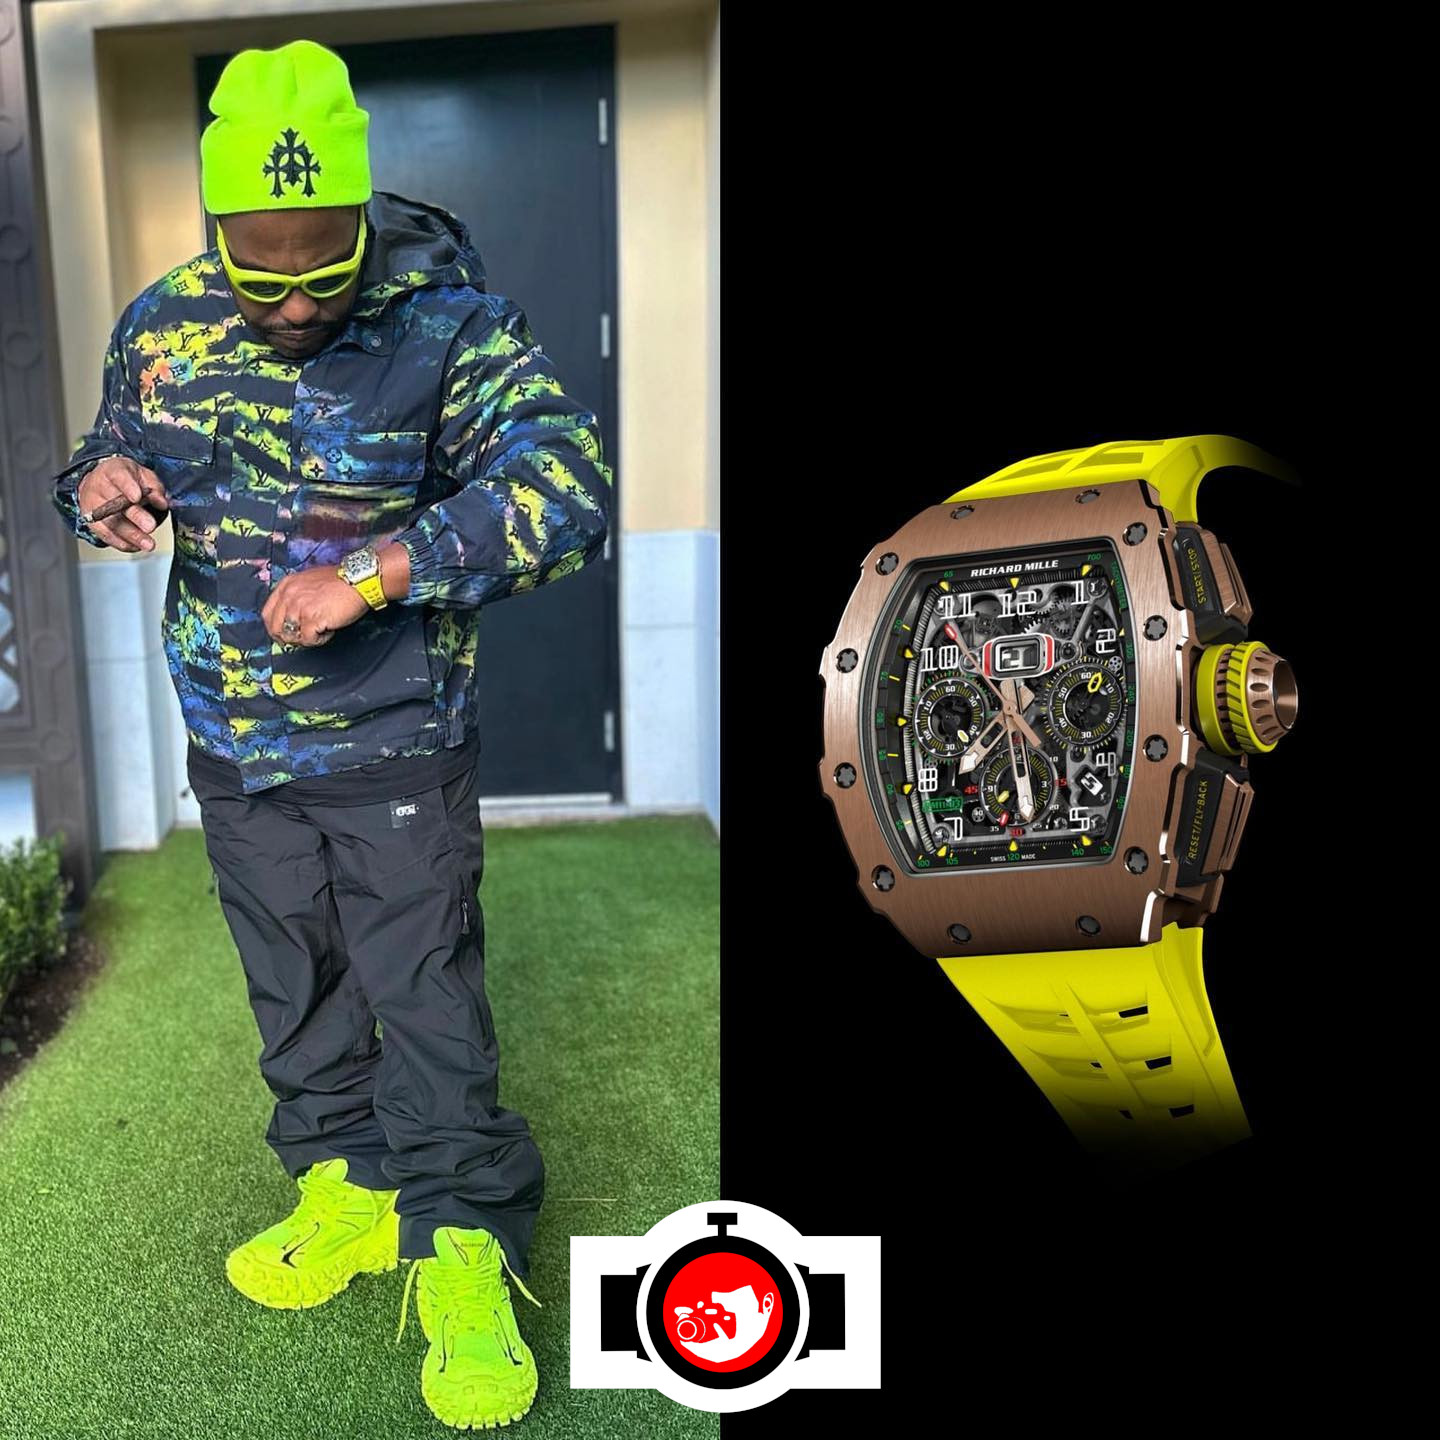 rapper LukaBrazi spotted wearing a Richard Mille RM 11-03